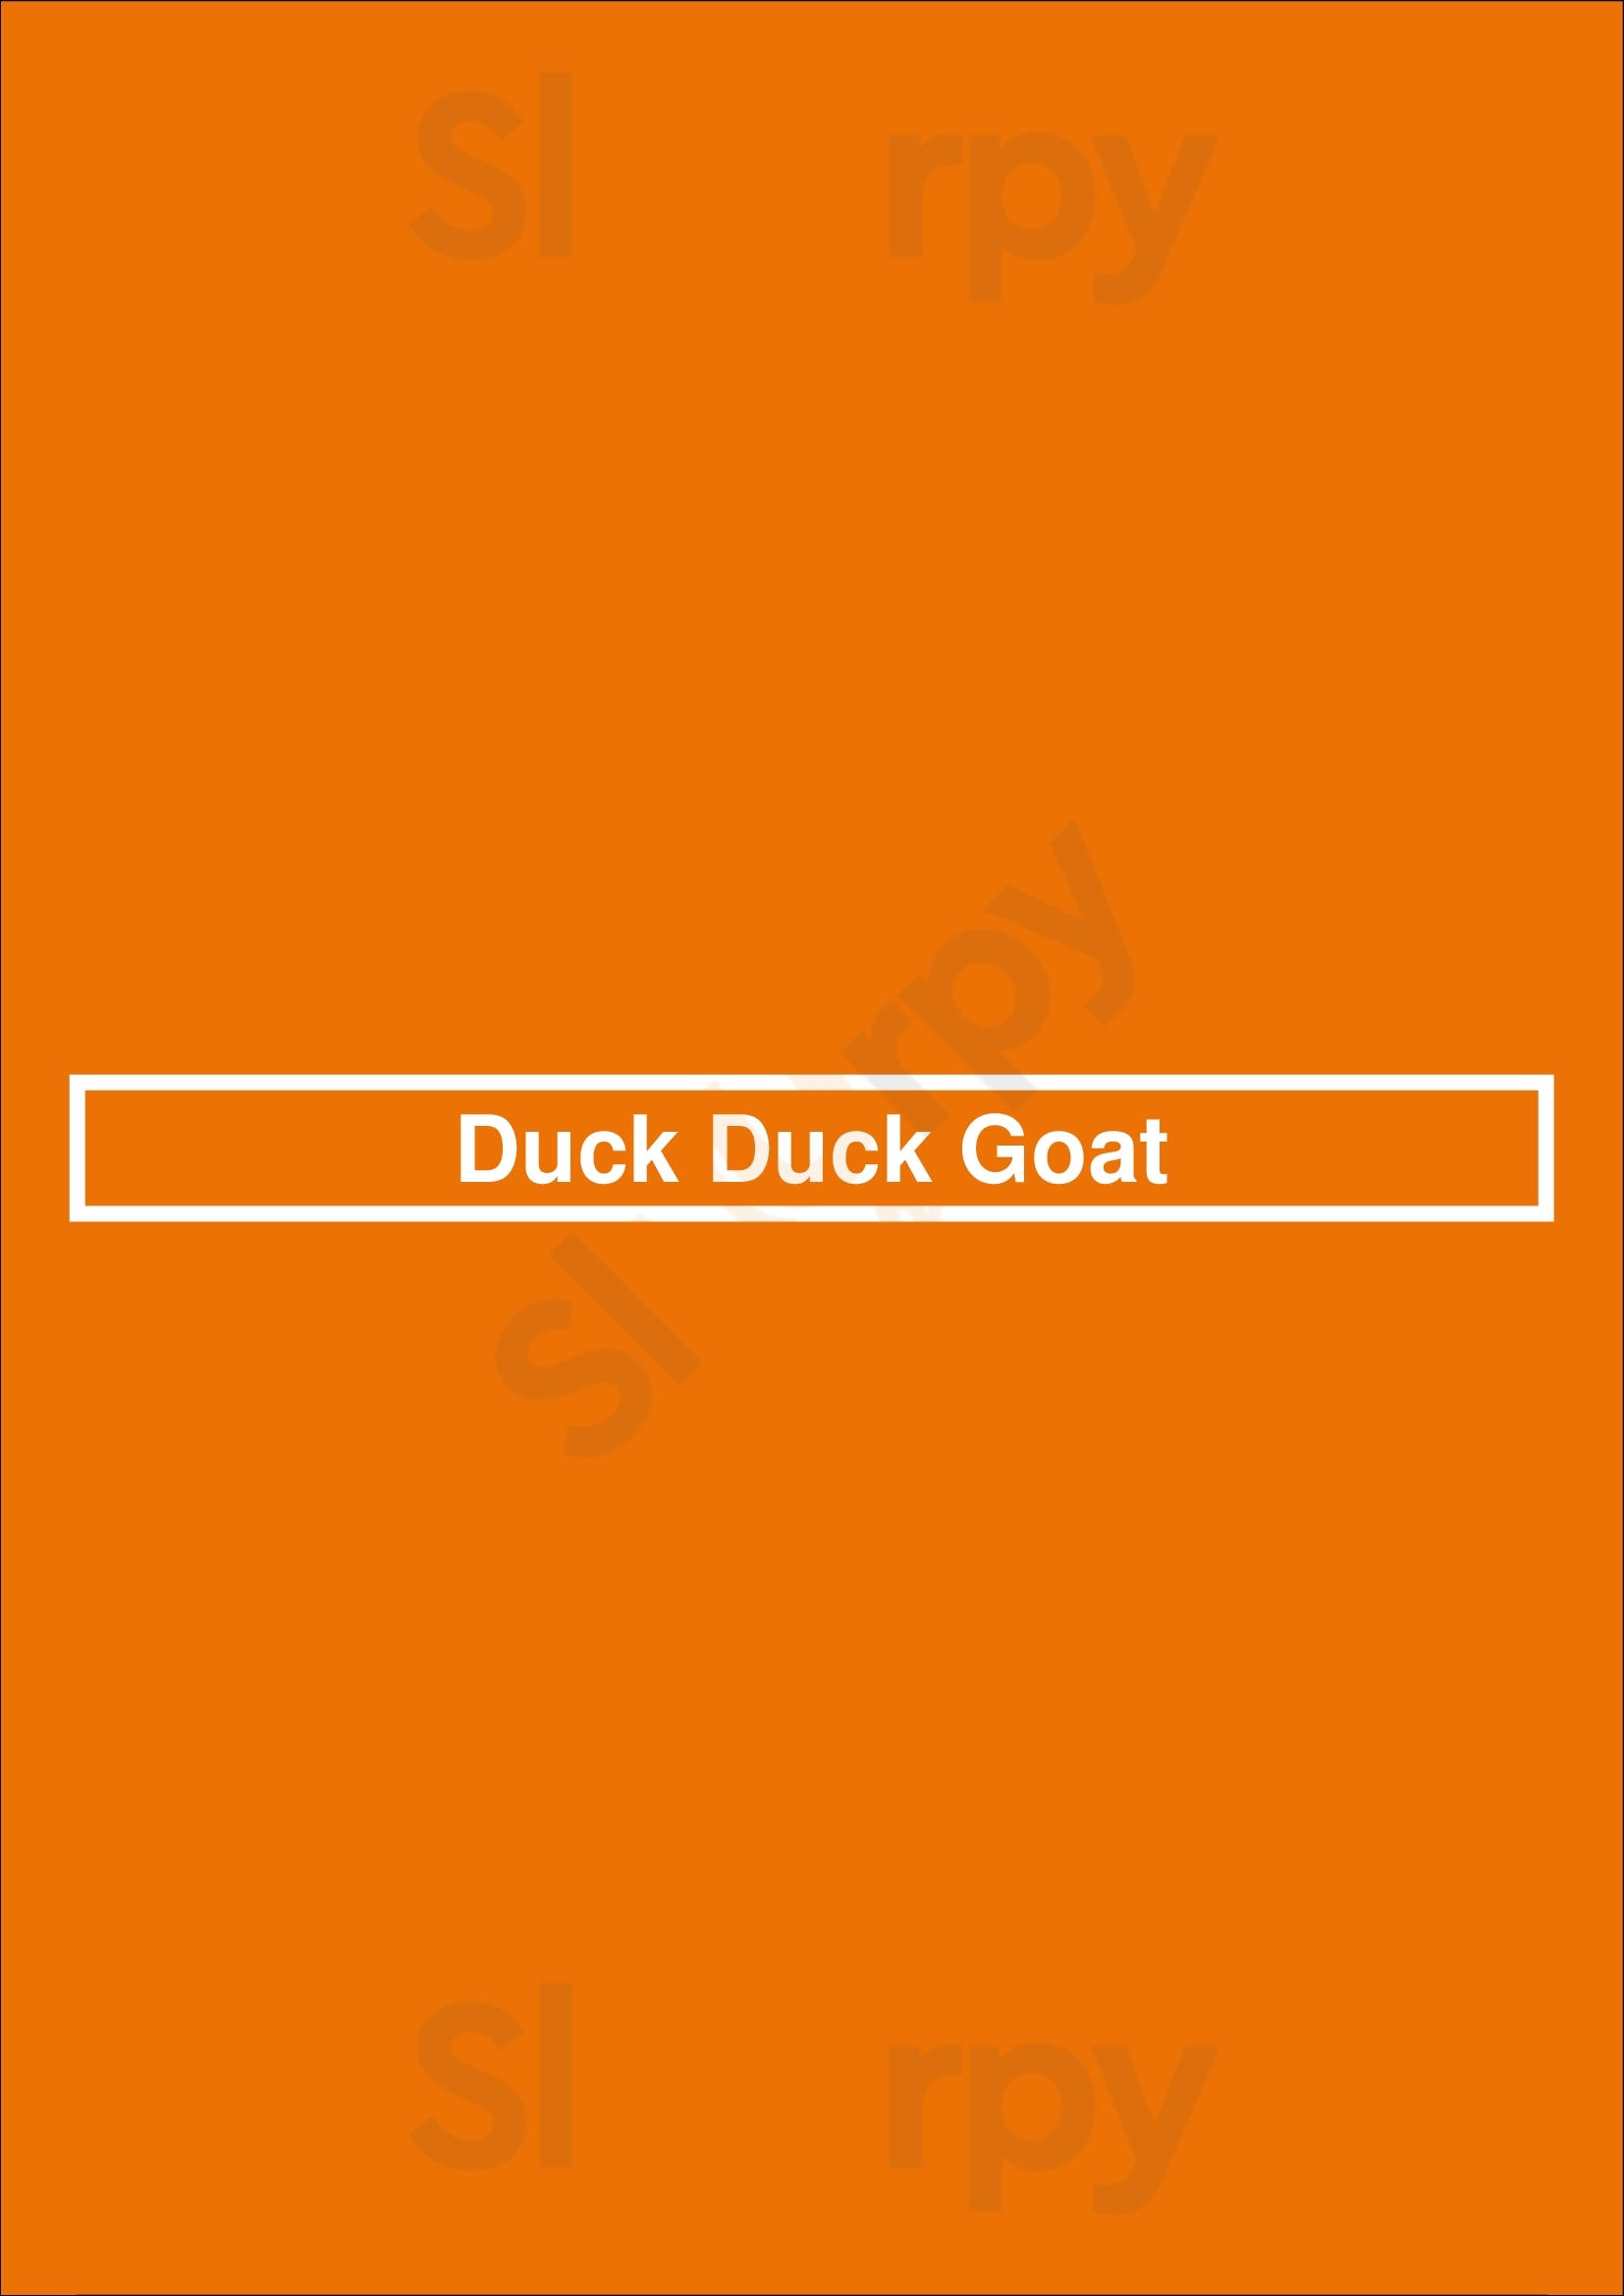 Duck Duck Goat Chicago Menu - 1